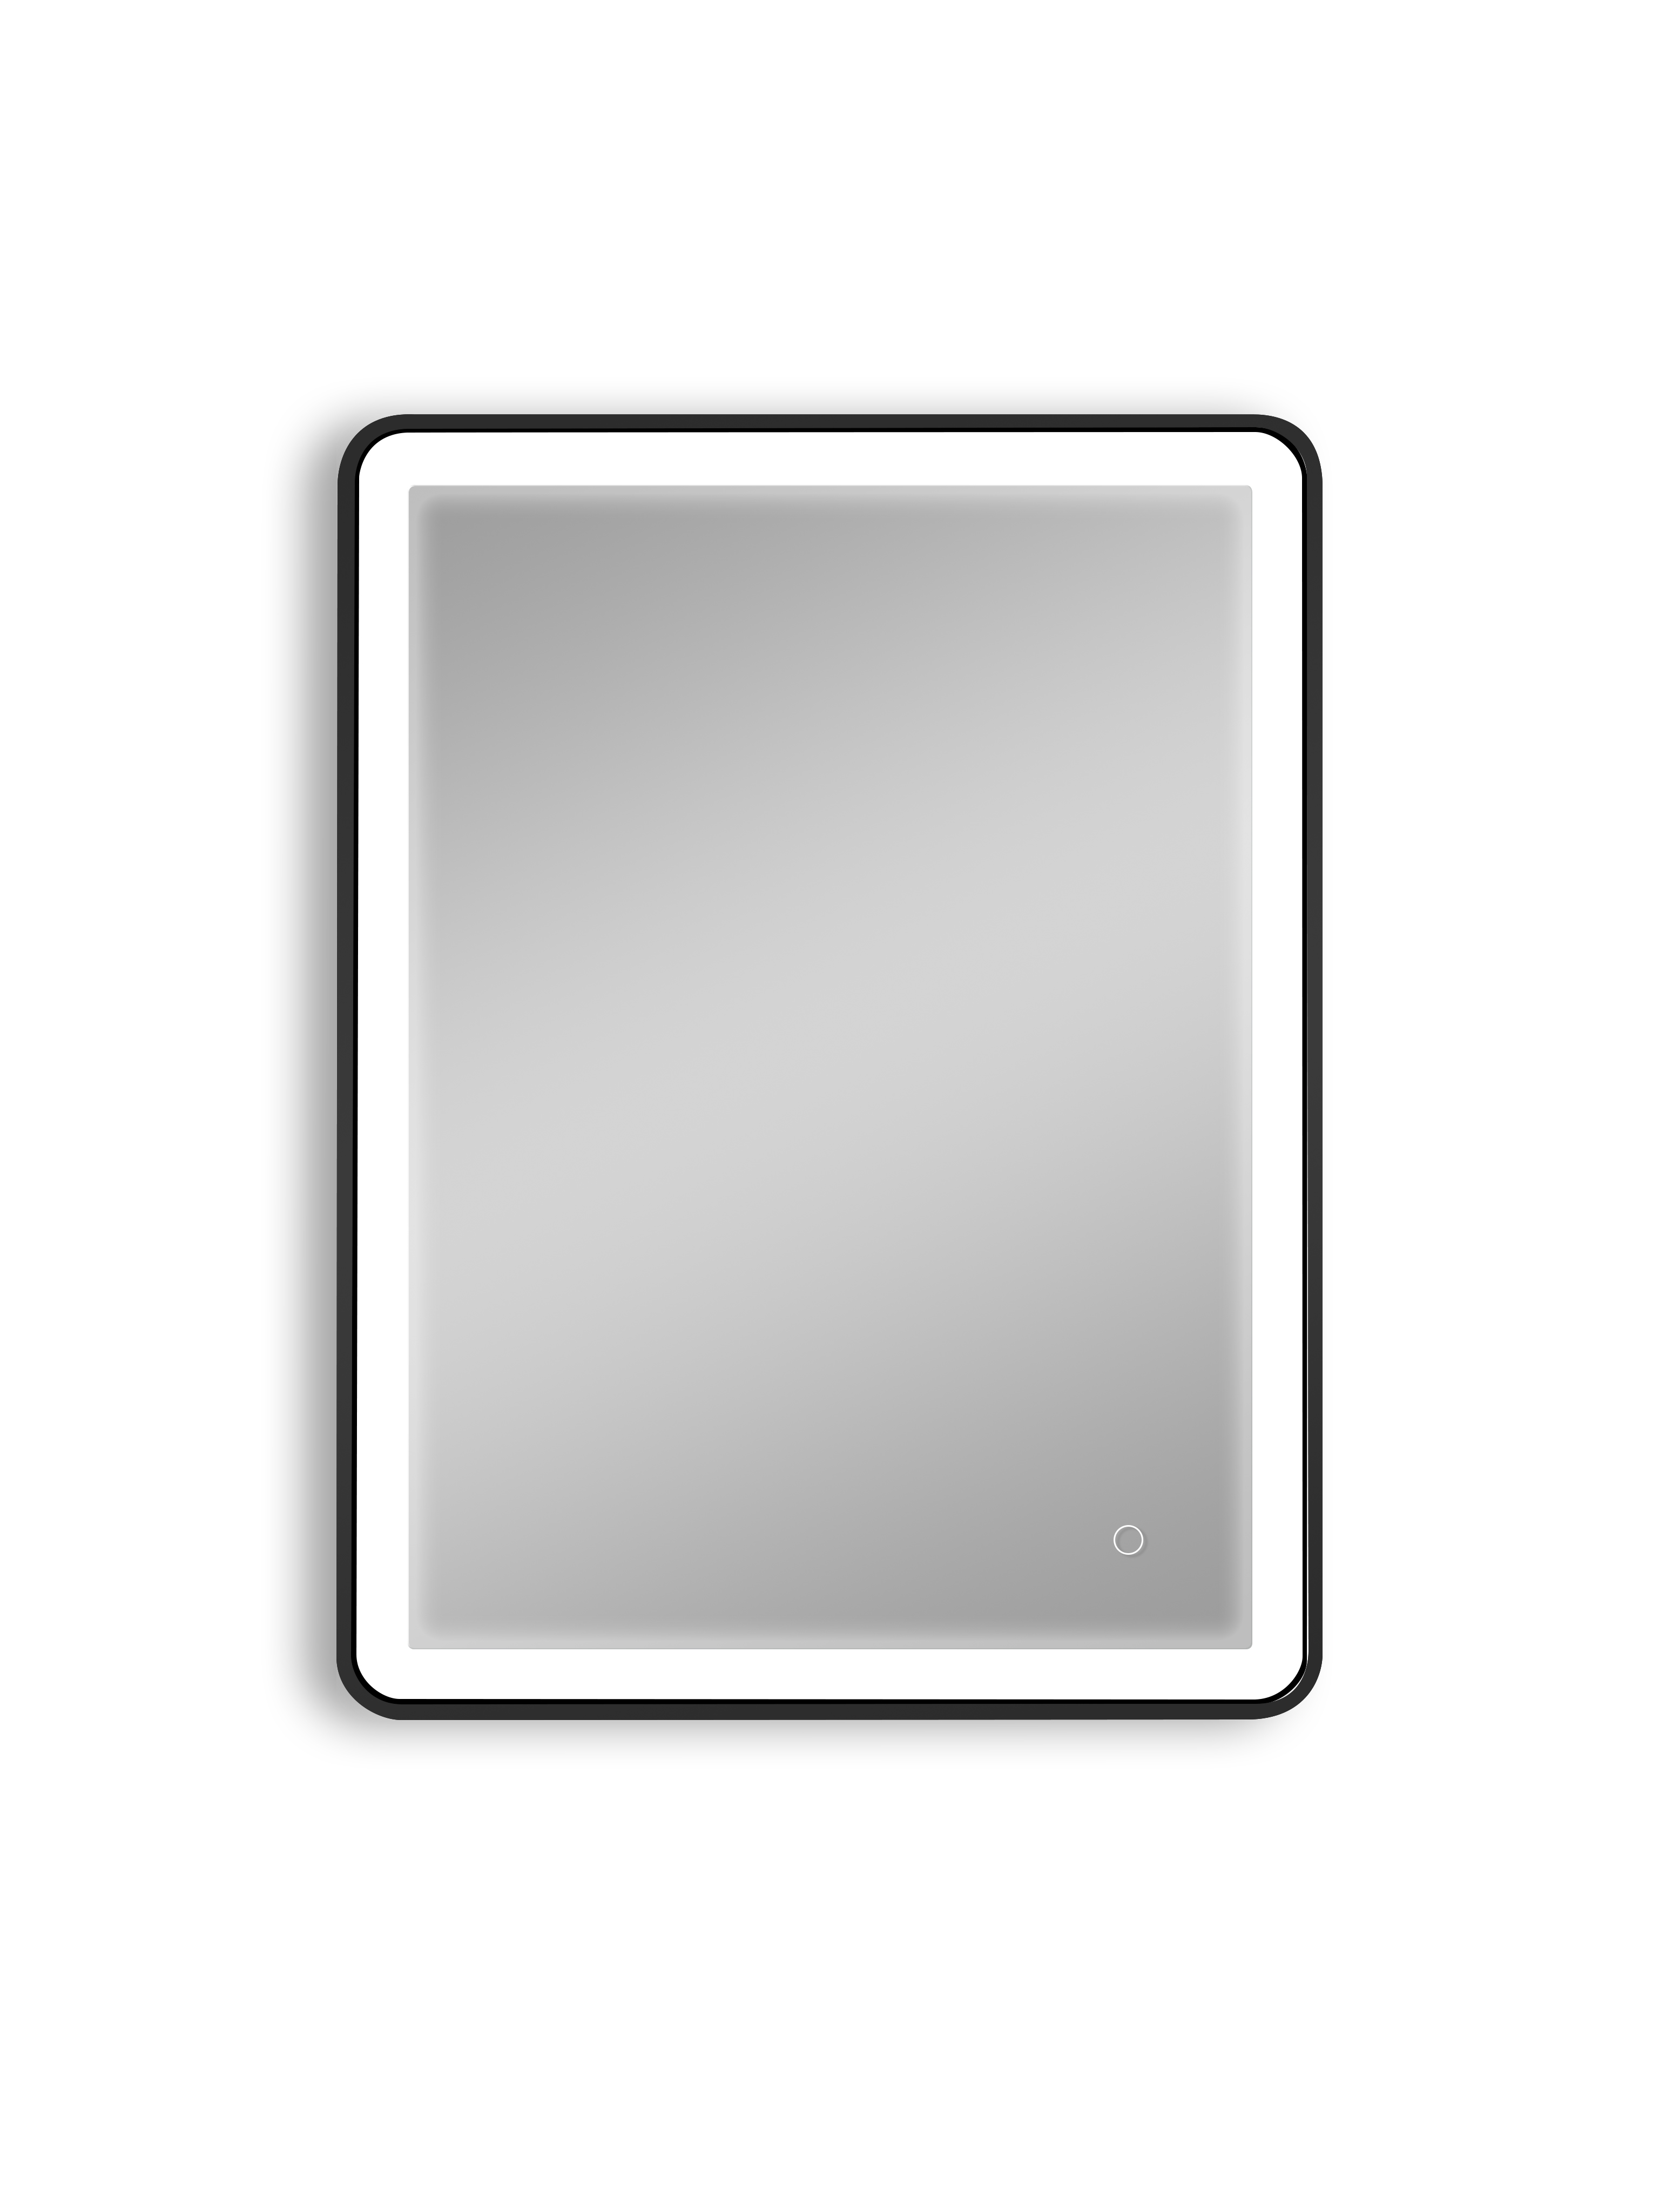 24x32 Black frame led  mirror aluminium powder coating-Boyel Living